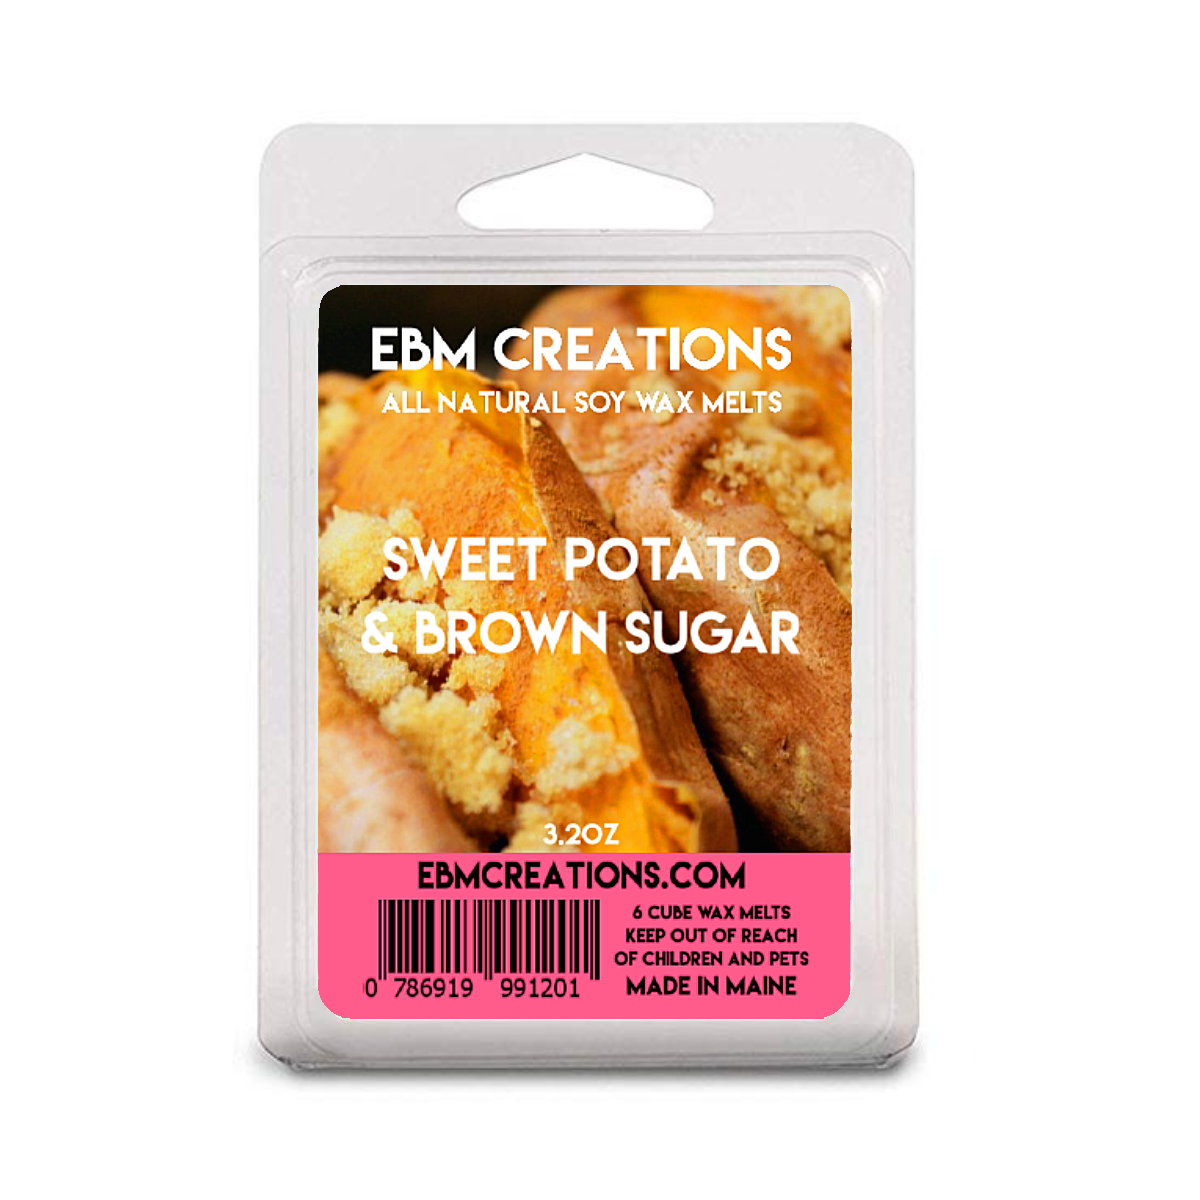 Sweet Potato & Brown Sugar - 3.2 oz Clamshell